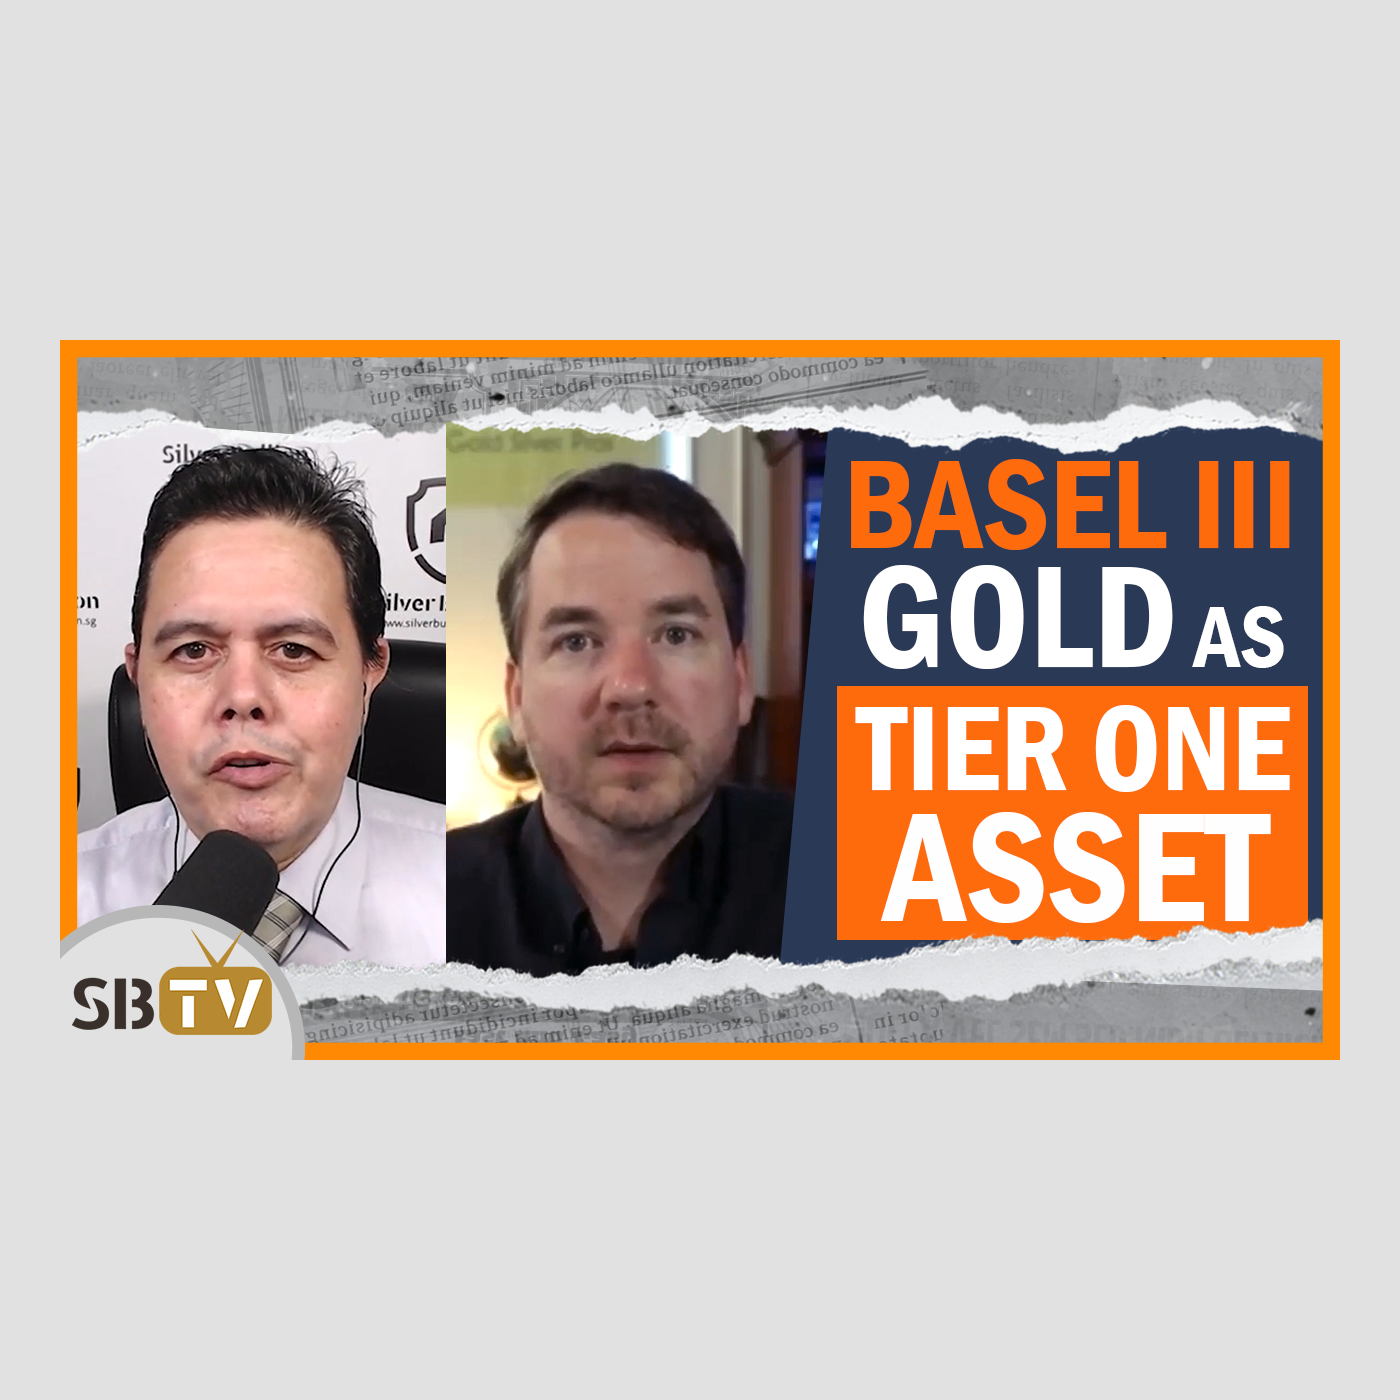 168 Robert Kientz - Basel III Enough to Strengthen Banks with Gold as Tier 1 Asset?